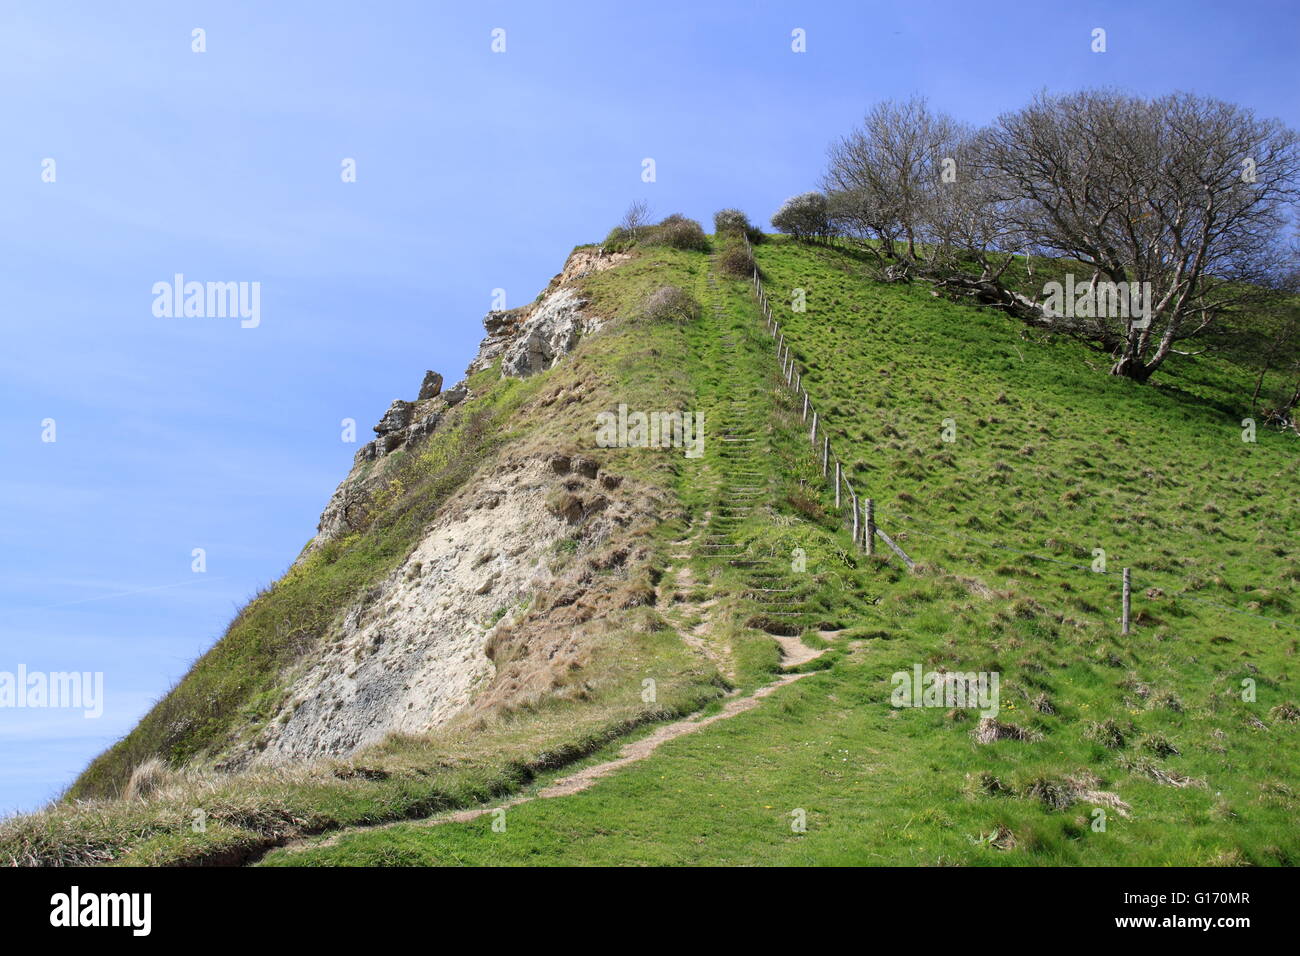 Houns-tout Cliff, Worth Matravers, Corfe, Purbeck, Jurassic Coast, Dorset, England, Great Britain, United Kingdom, UK, Europe Stock Photo